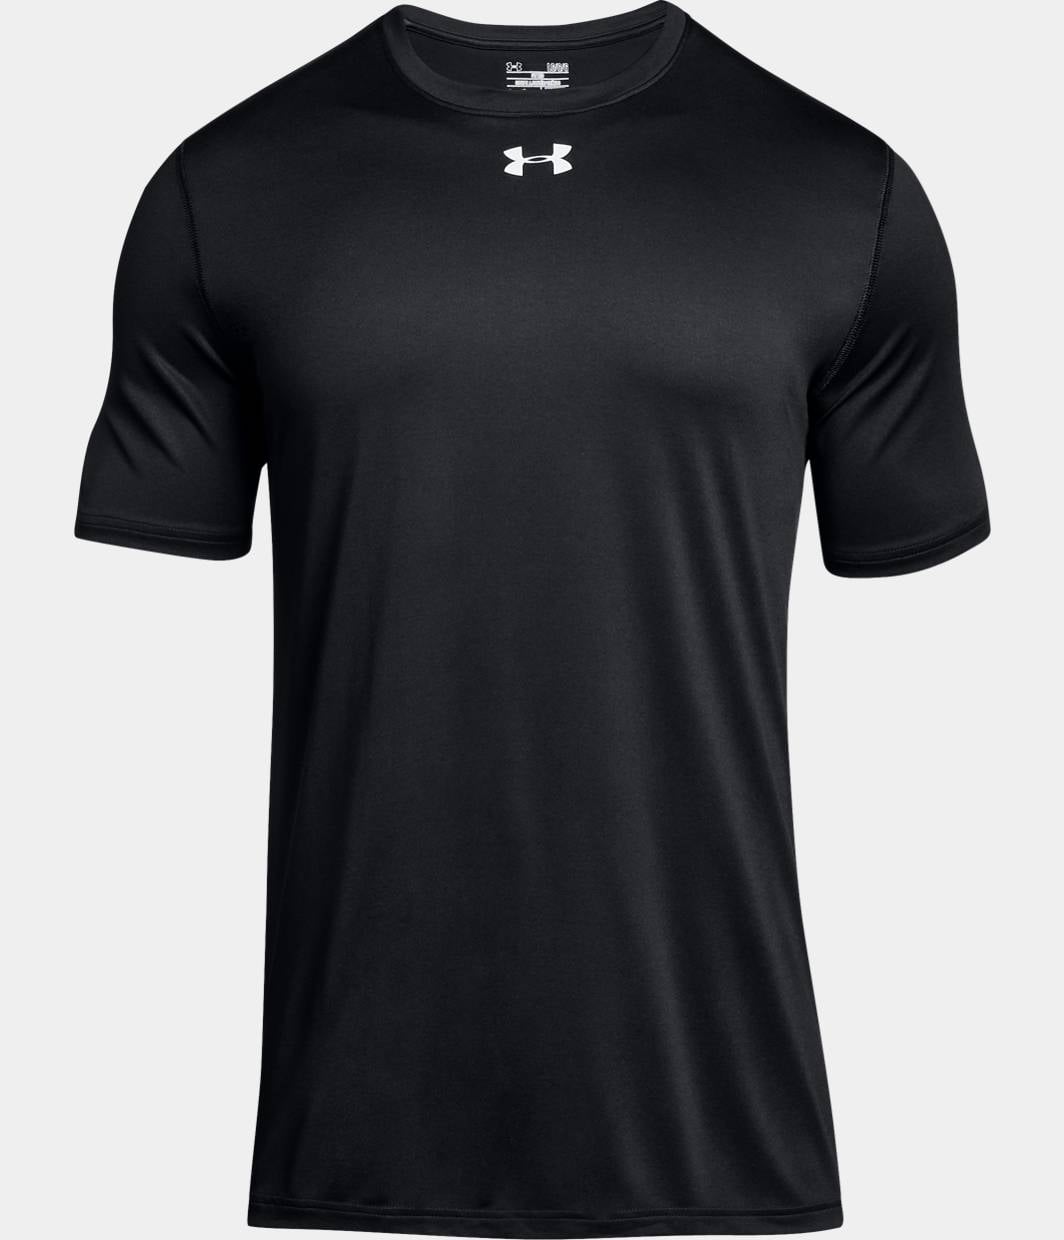 New Under Armour Men's HeatGear Locker T-Shirt Short Sleeve Tee Black/White 